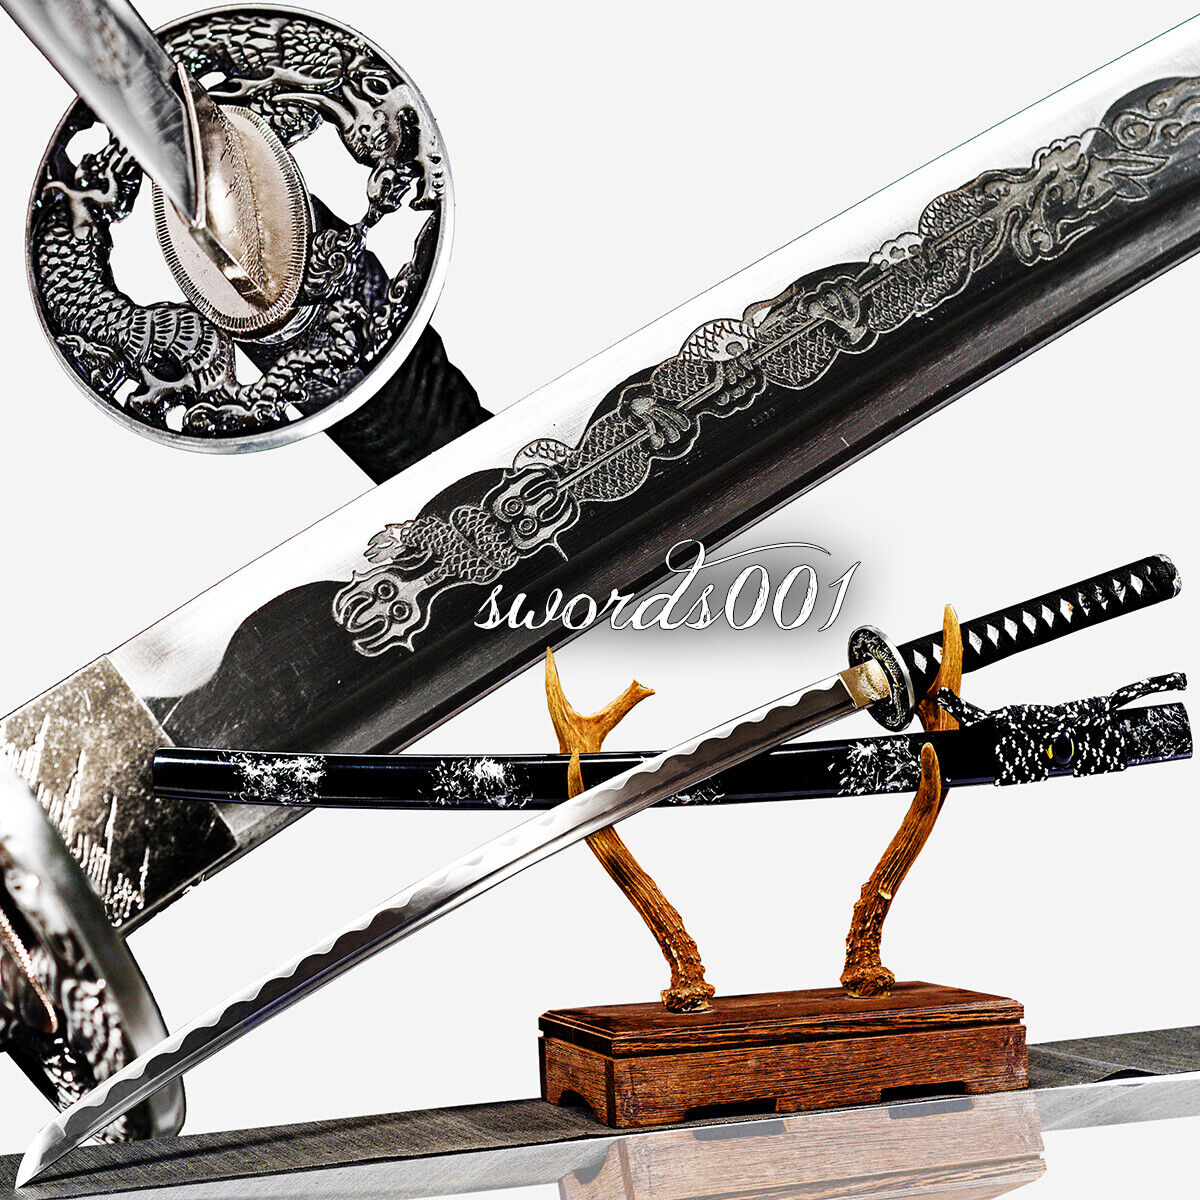 41 inch Handmade Japanese Samurai Katana Dragon Sword Carbon Steel Full Tang 